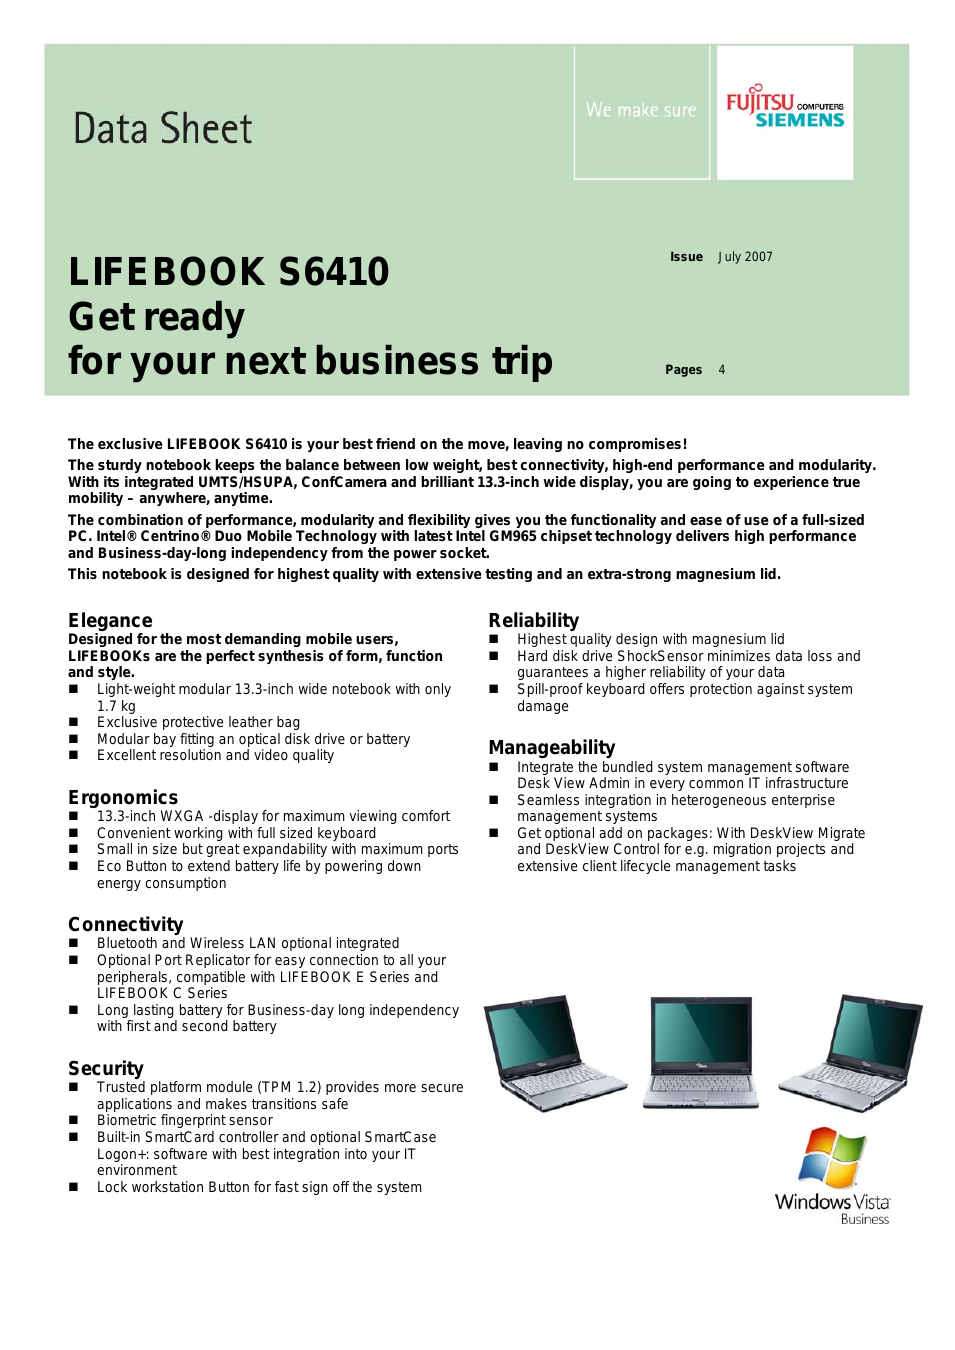 Lifebook S6410